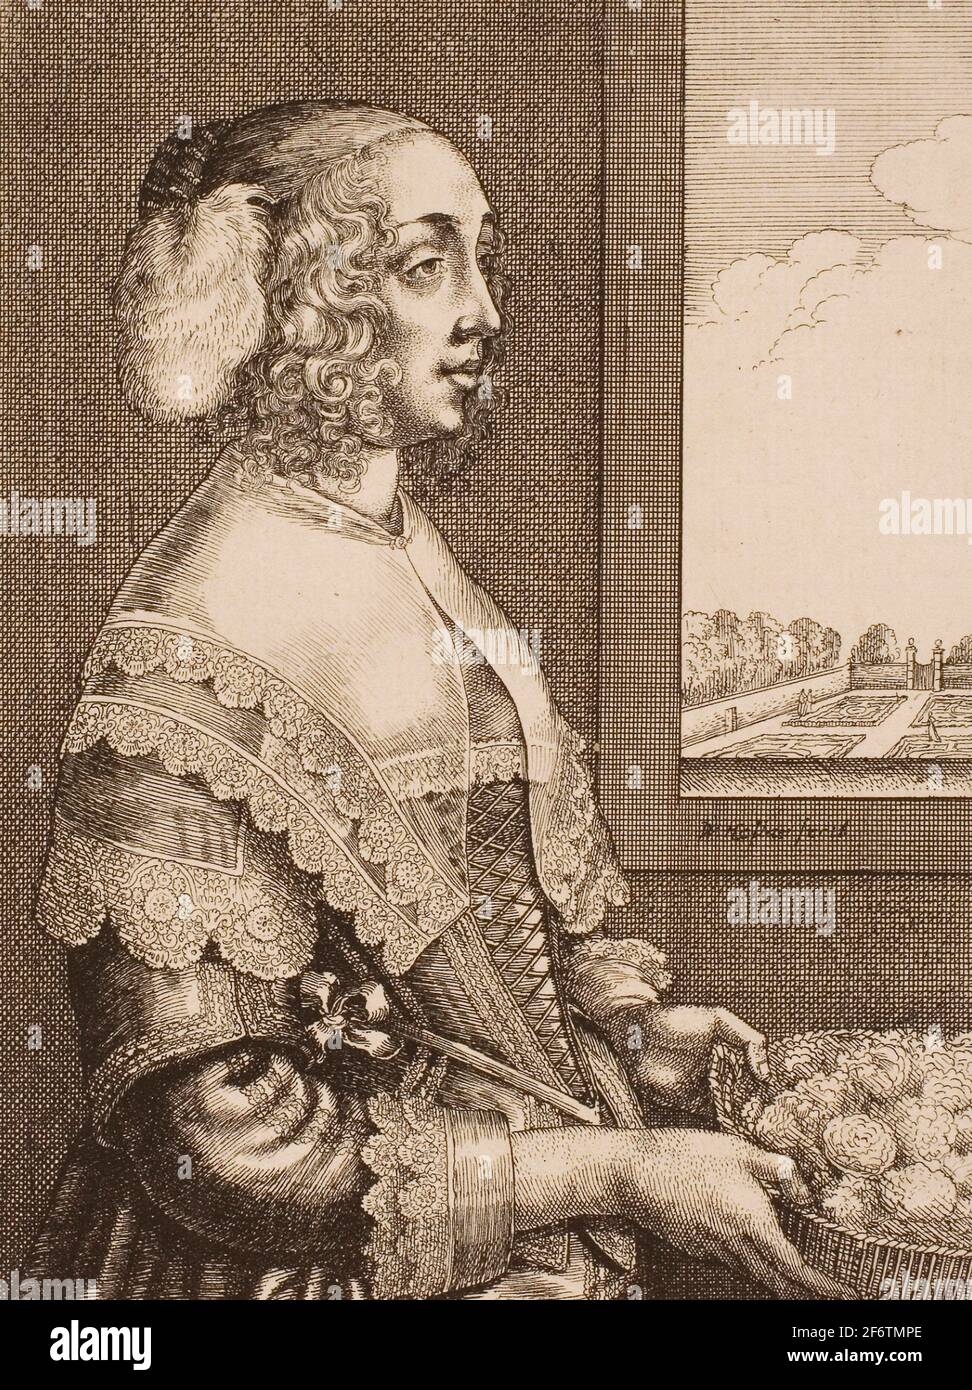 Author: Wenceslaus Hollar. Spring - 1644 - Wenceslaus Hollar Czech, 1607-1677. Etching on ivory laid paper. Bohemia. Stock Photo